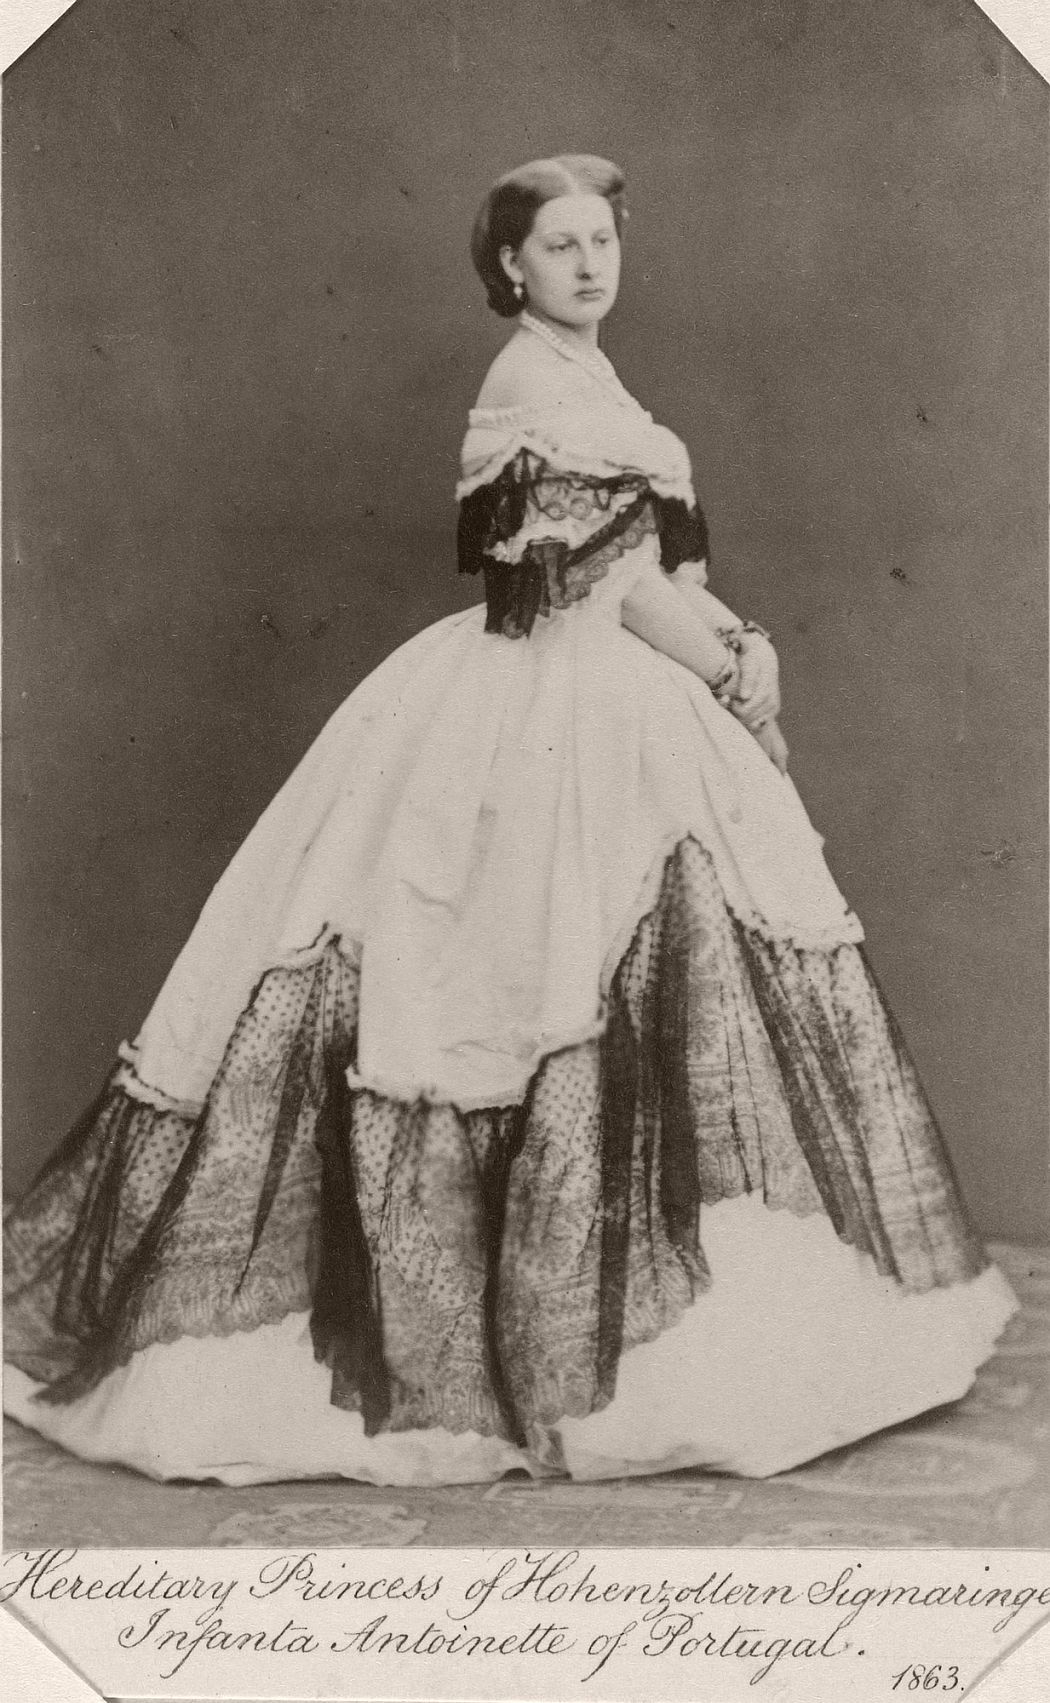 Infanta Antonia, Hereditary Princess of Hohenzollern-Sigmaringen, 1863